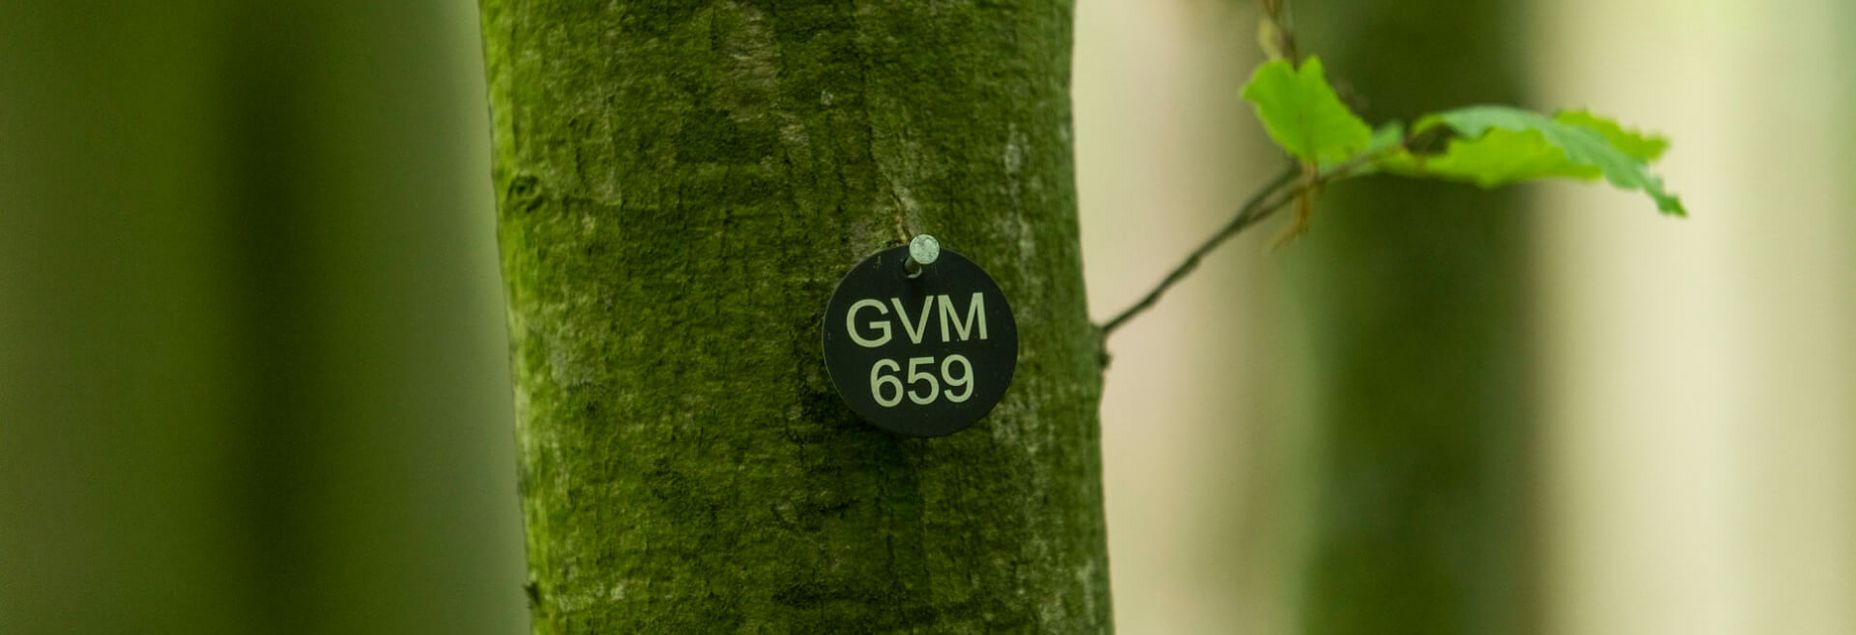 Baum GVM 659 - Plakette